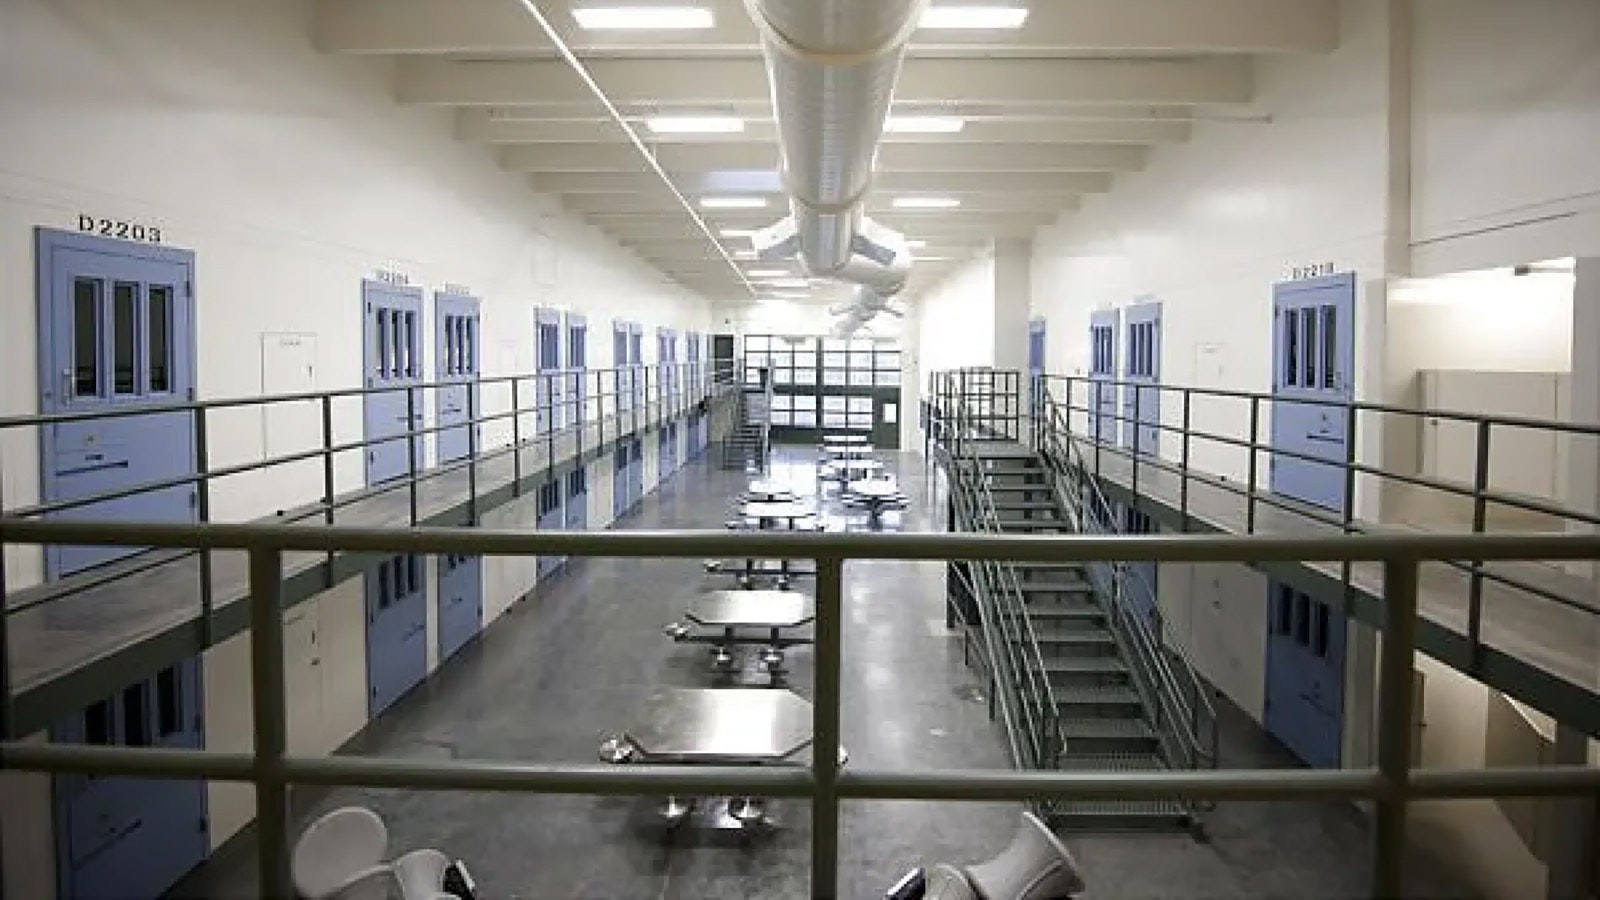 Torrington prison 2 10 27 23